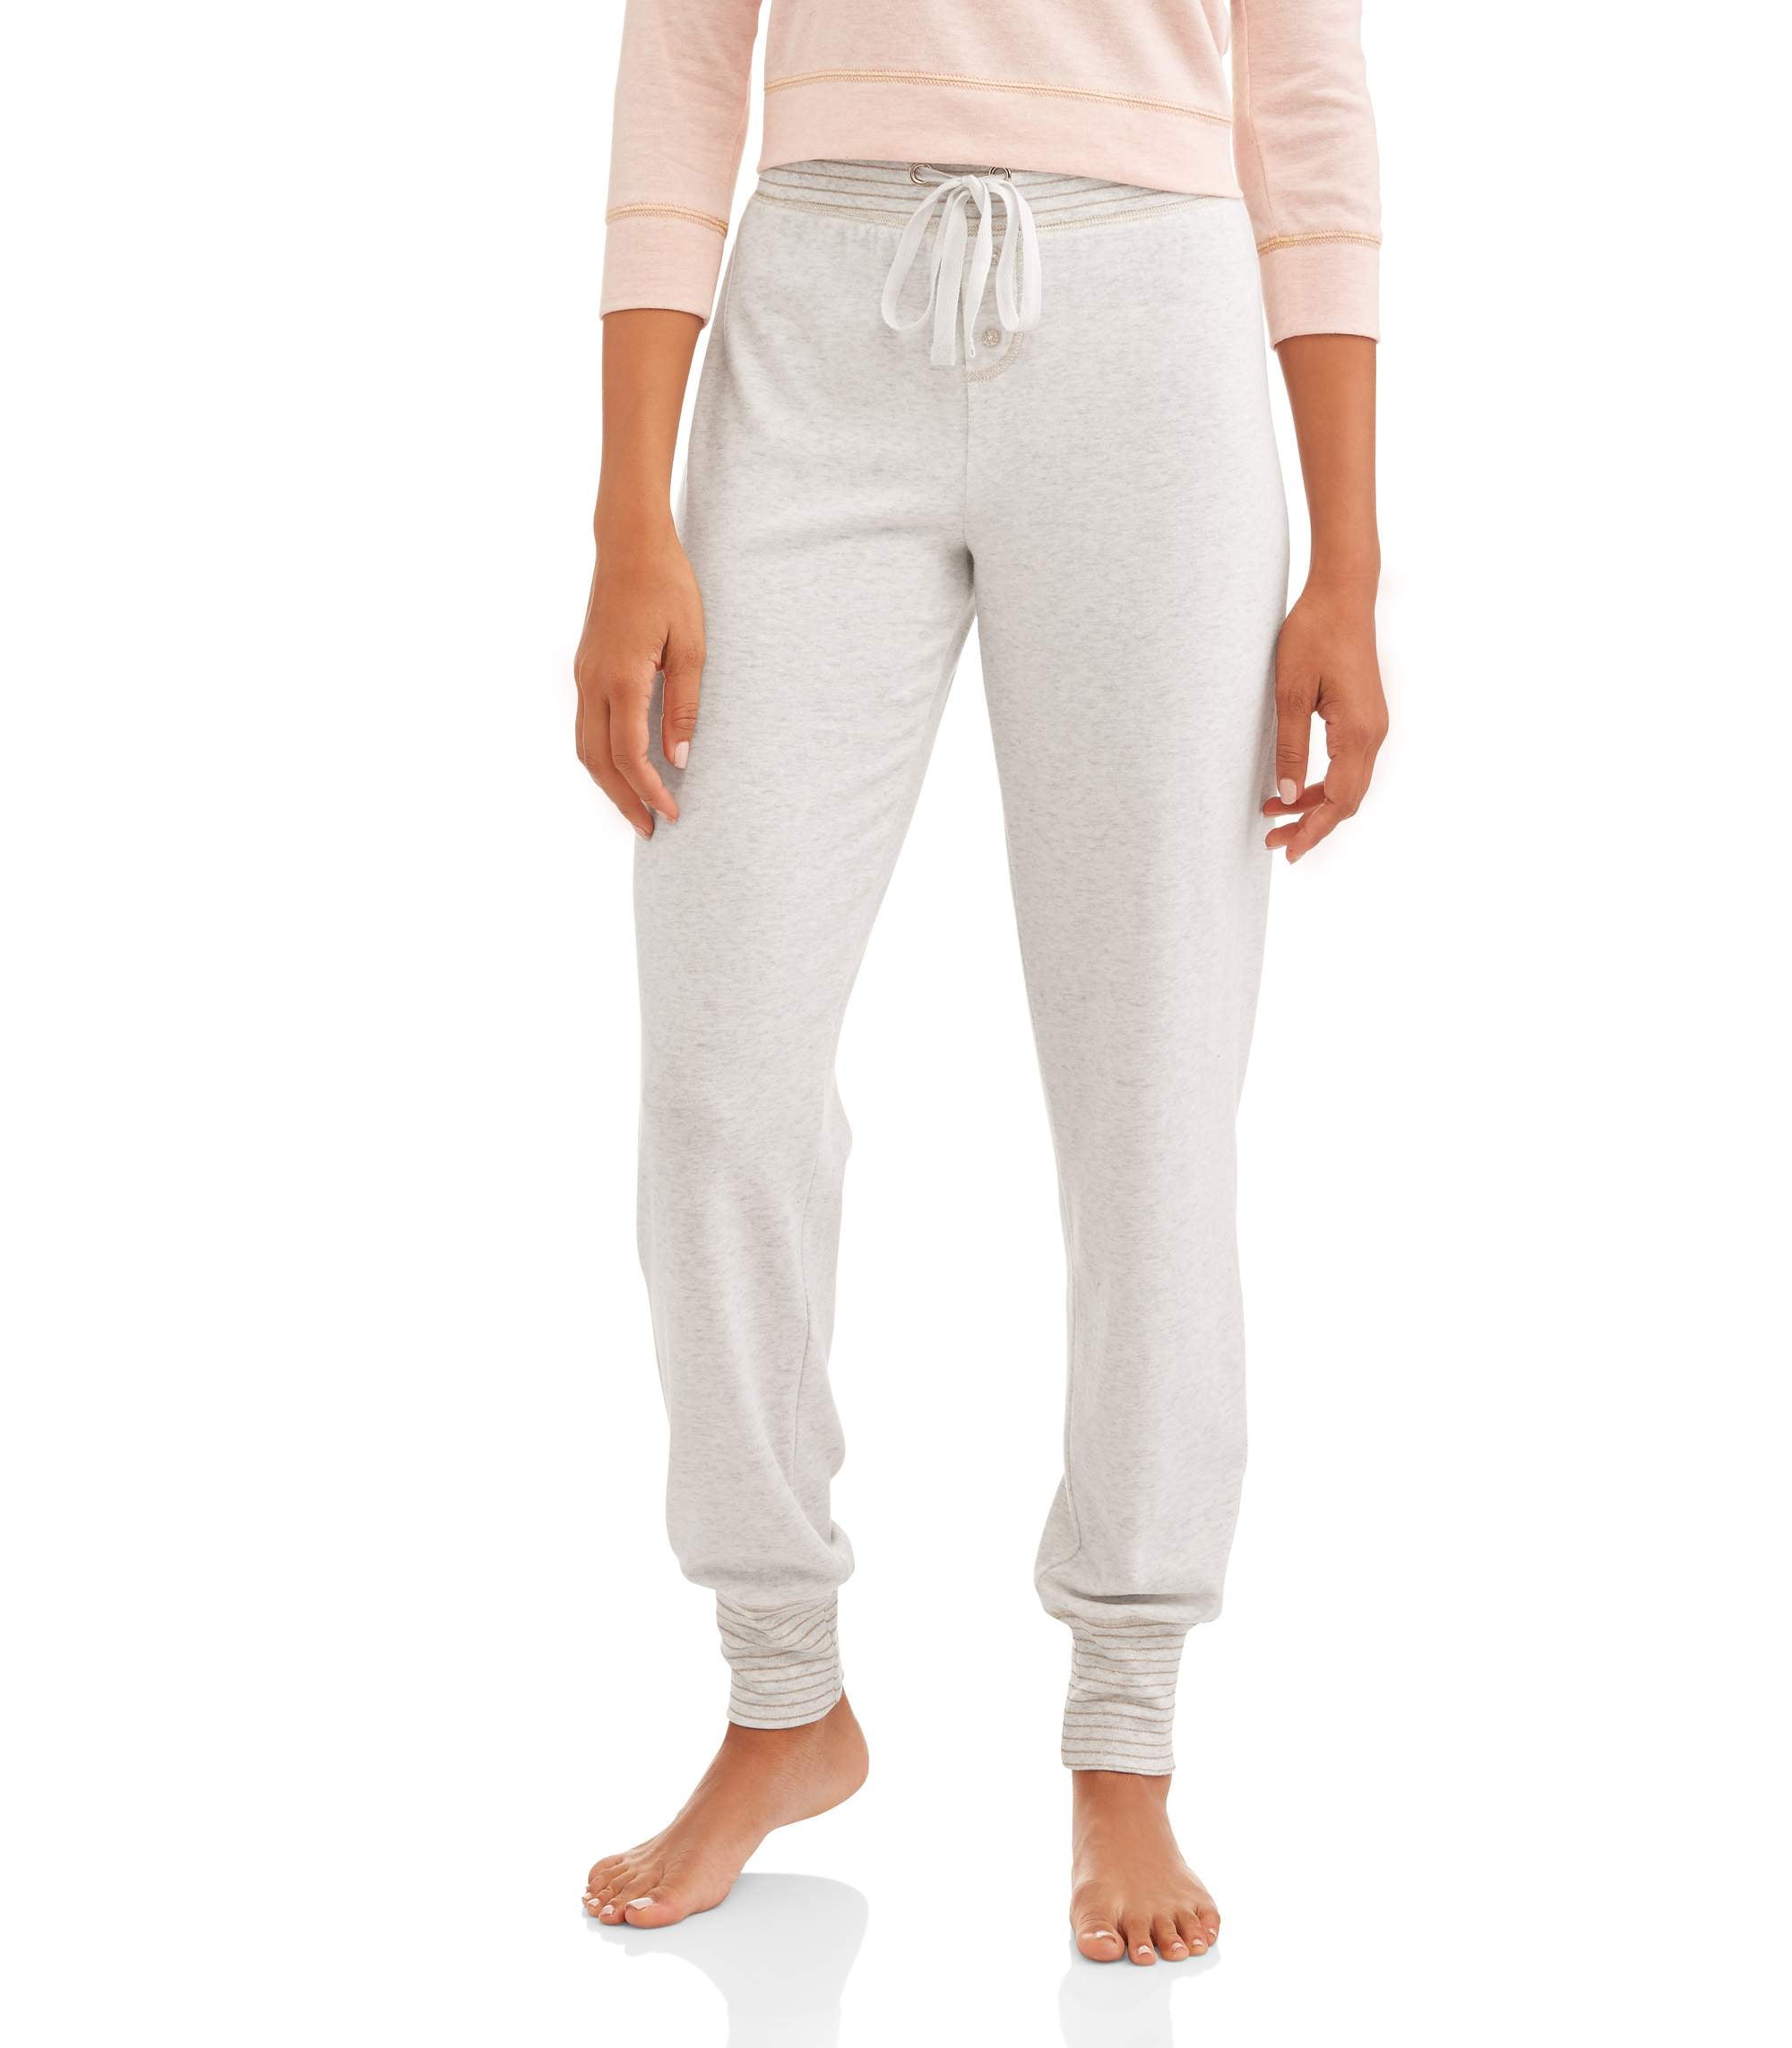 Women's Sweater Knit Lounge Pant - Walmart.com - Walmart.com